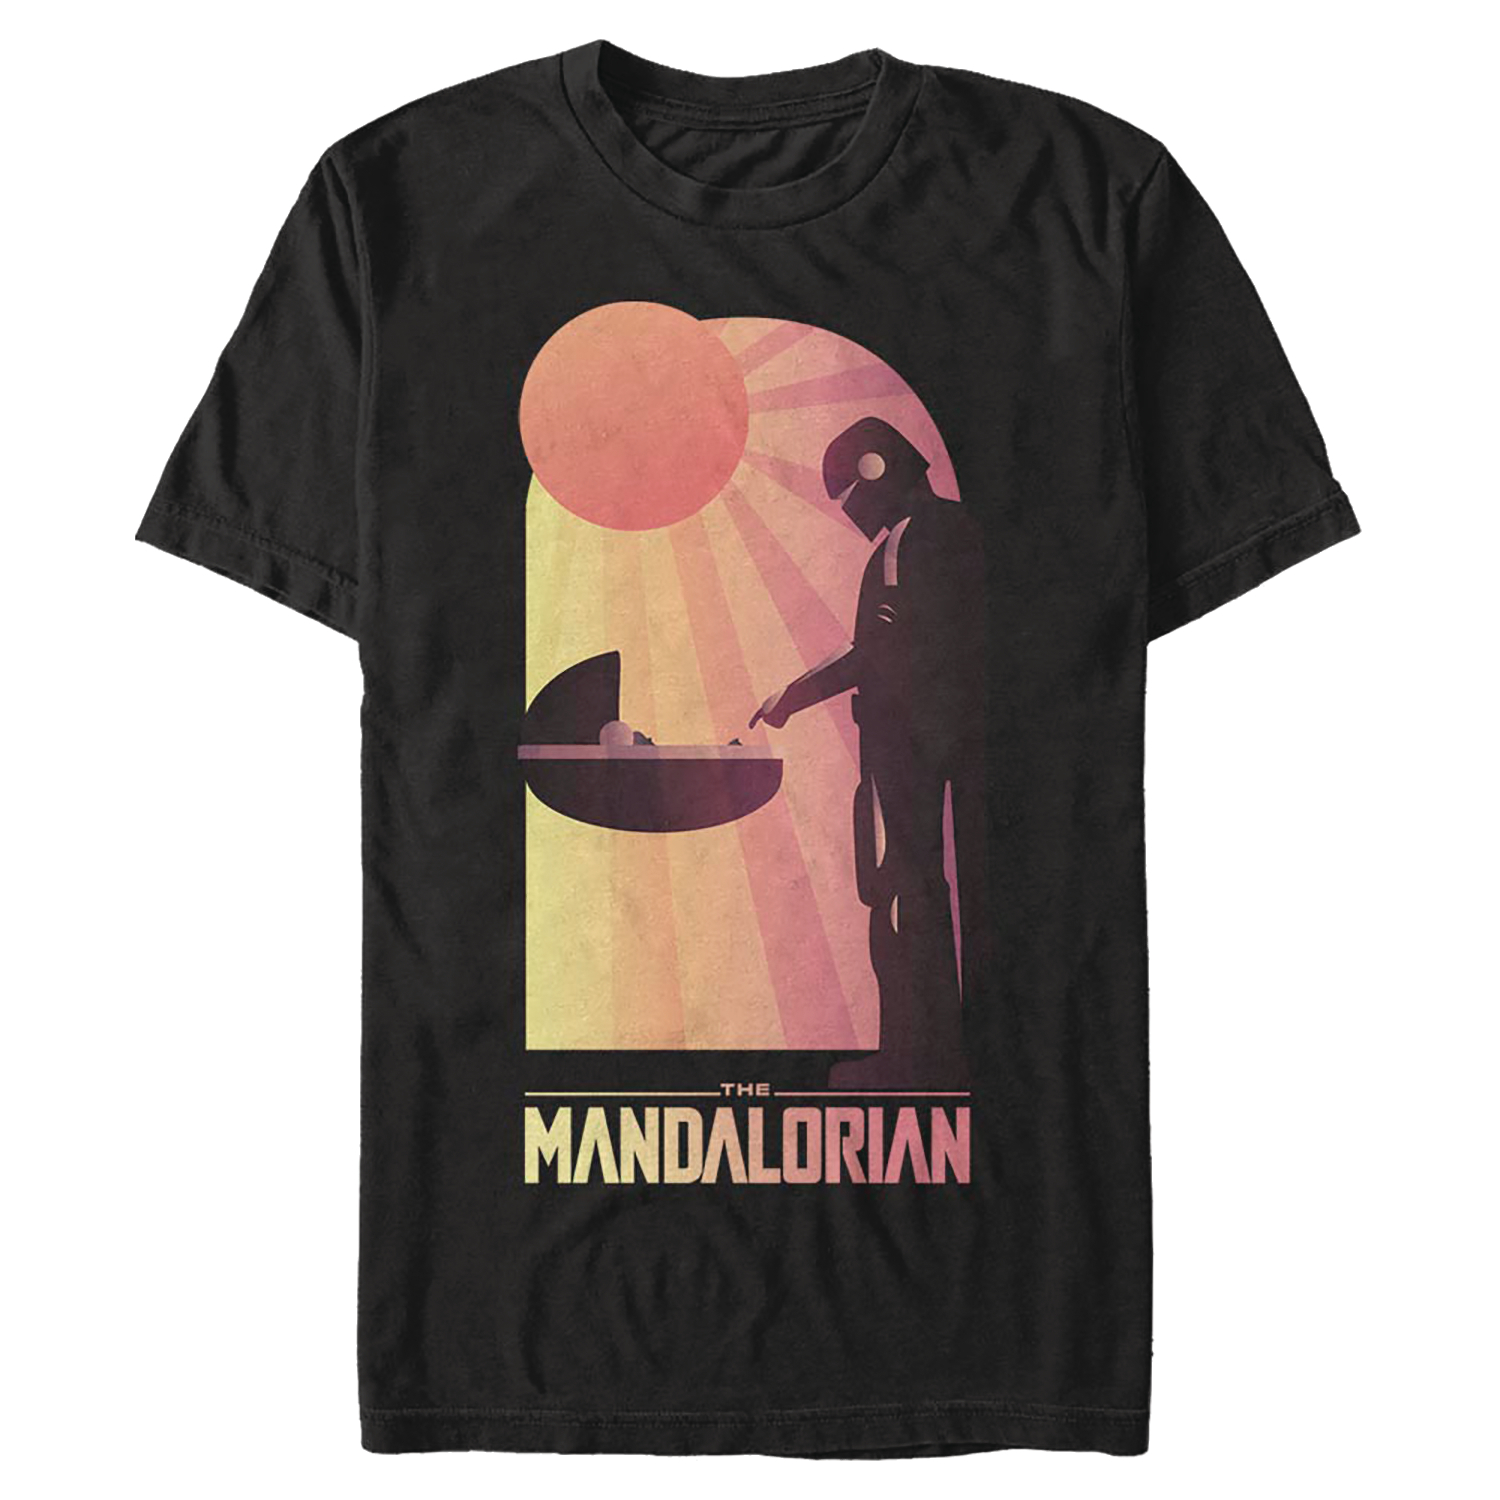 Star Wars The Mandalorian A Warm Meeting T-Shirt XL